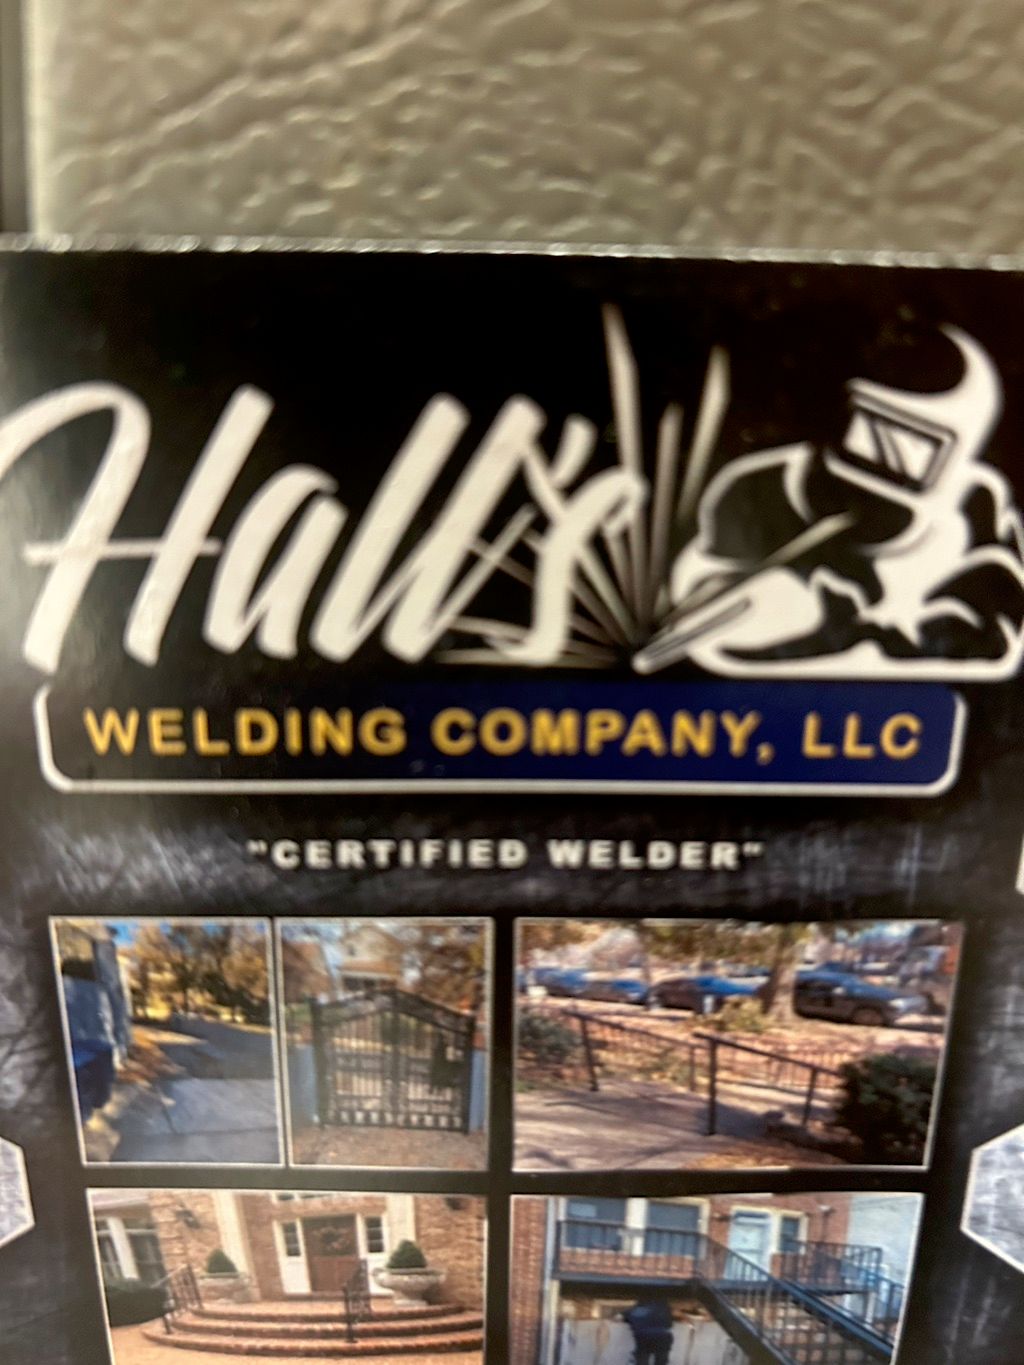 Hall's Welding Company LLC